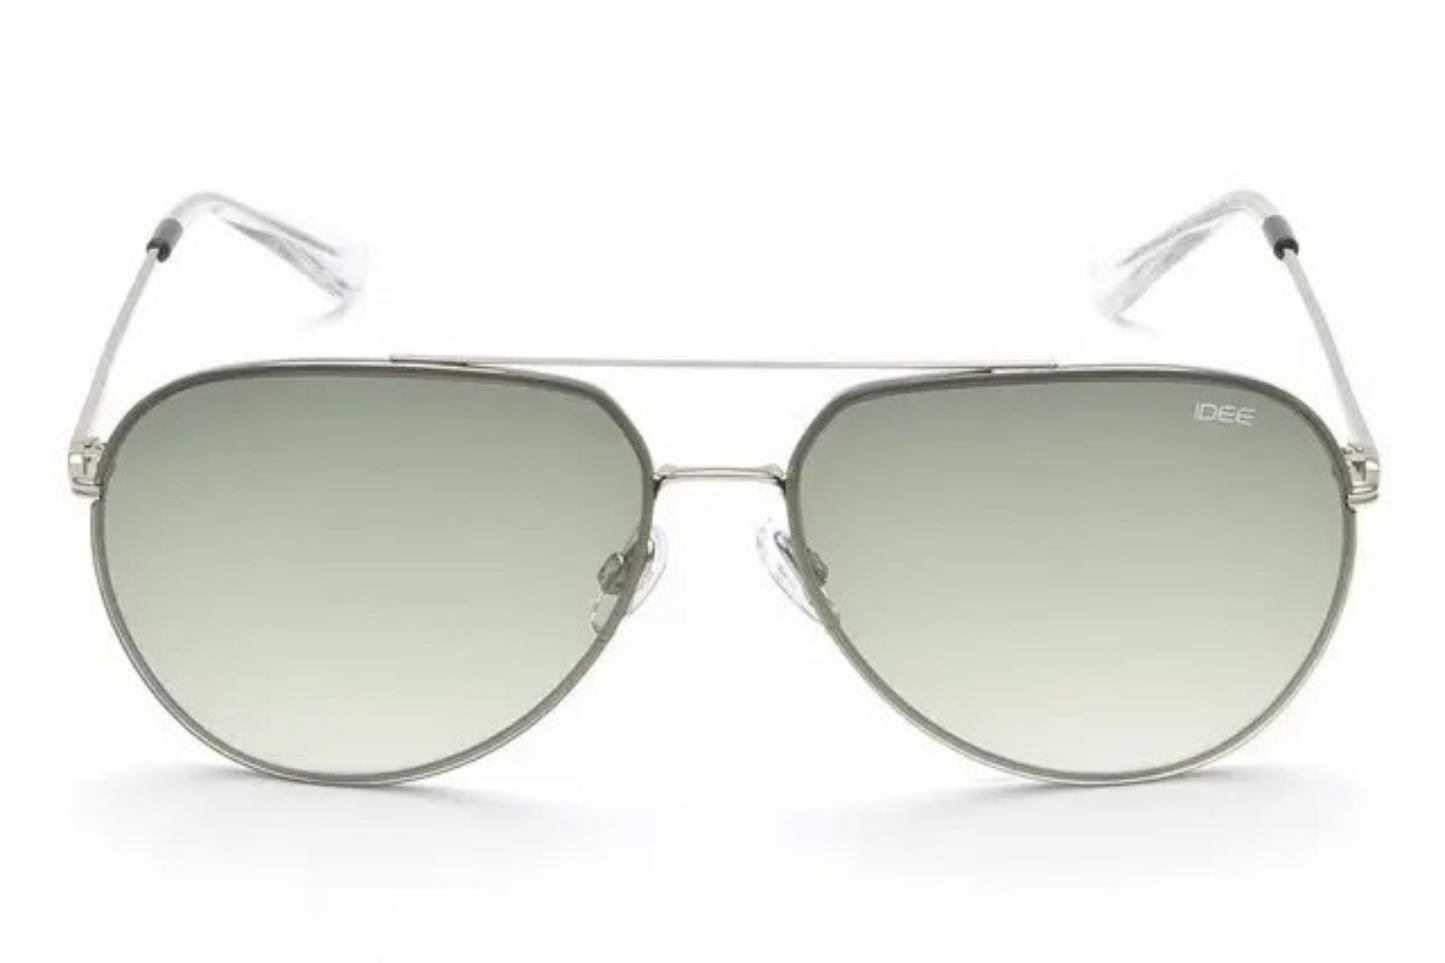 IDEE Sunglasses S2615 C4